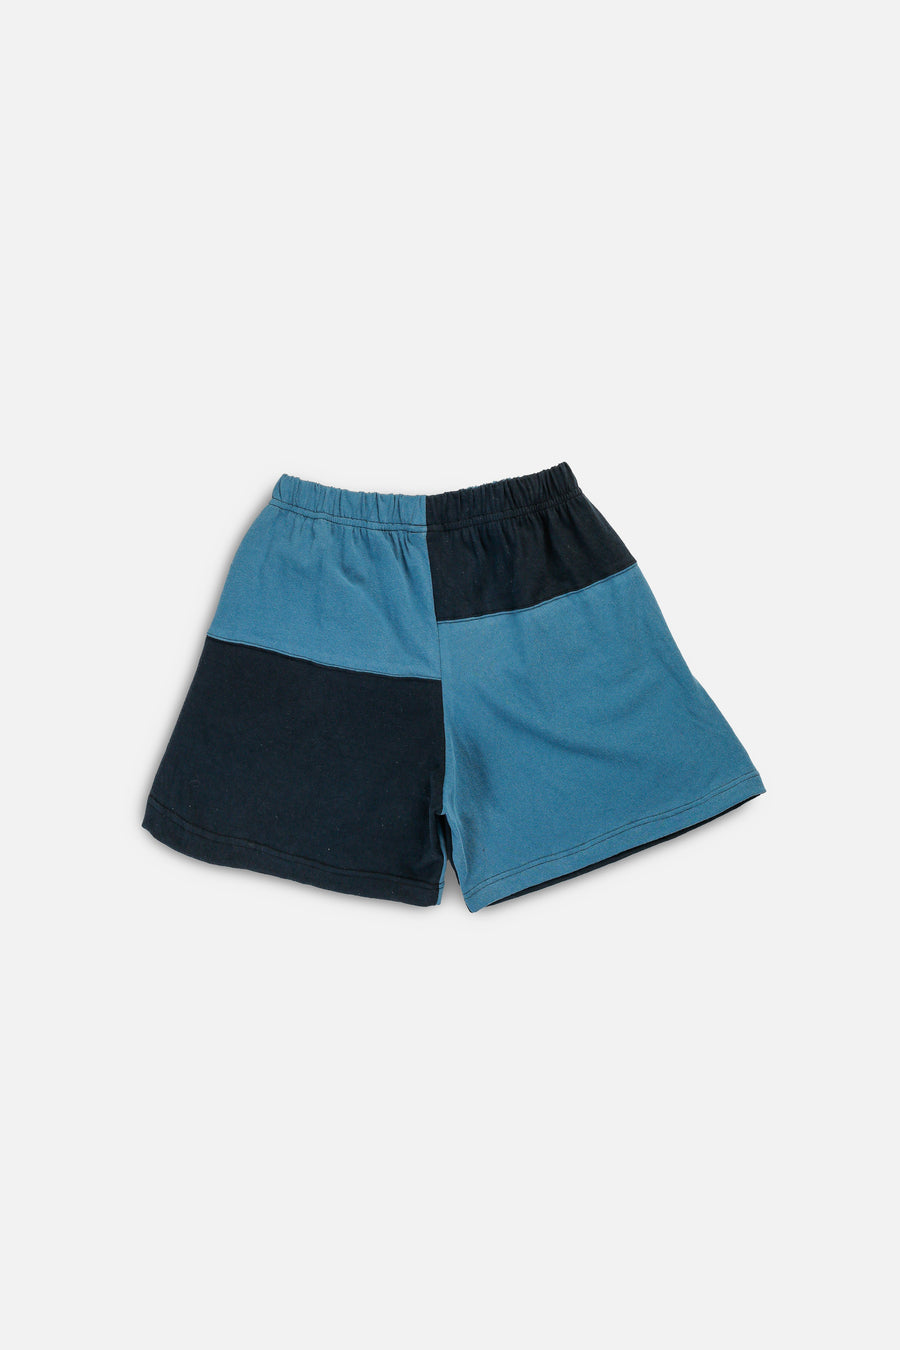 Unisex Rework Carhartt Patchwork Tee Shorts - M